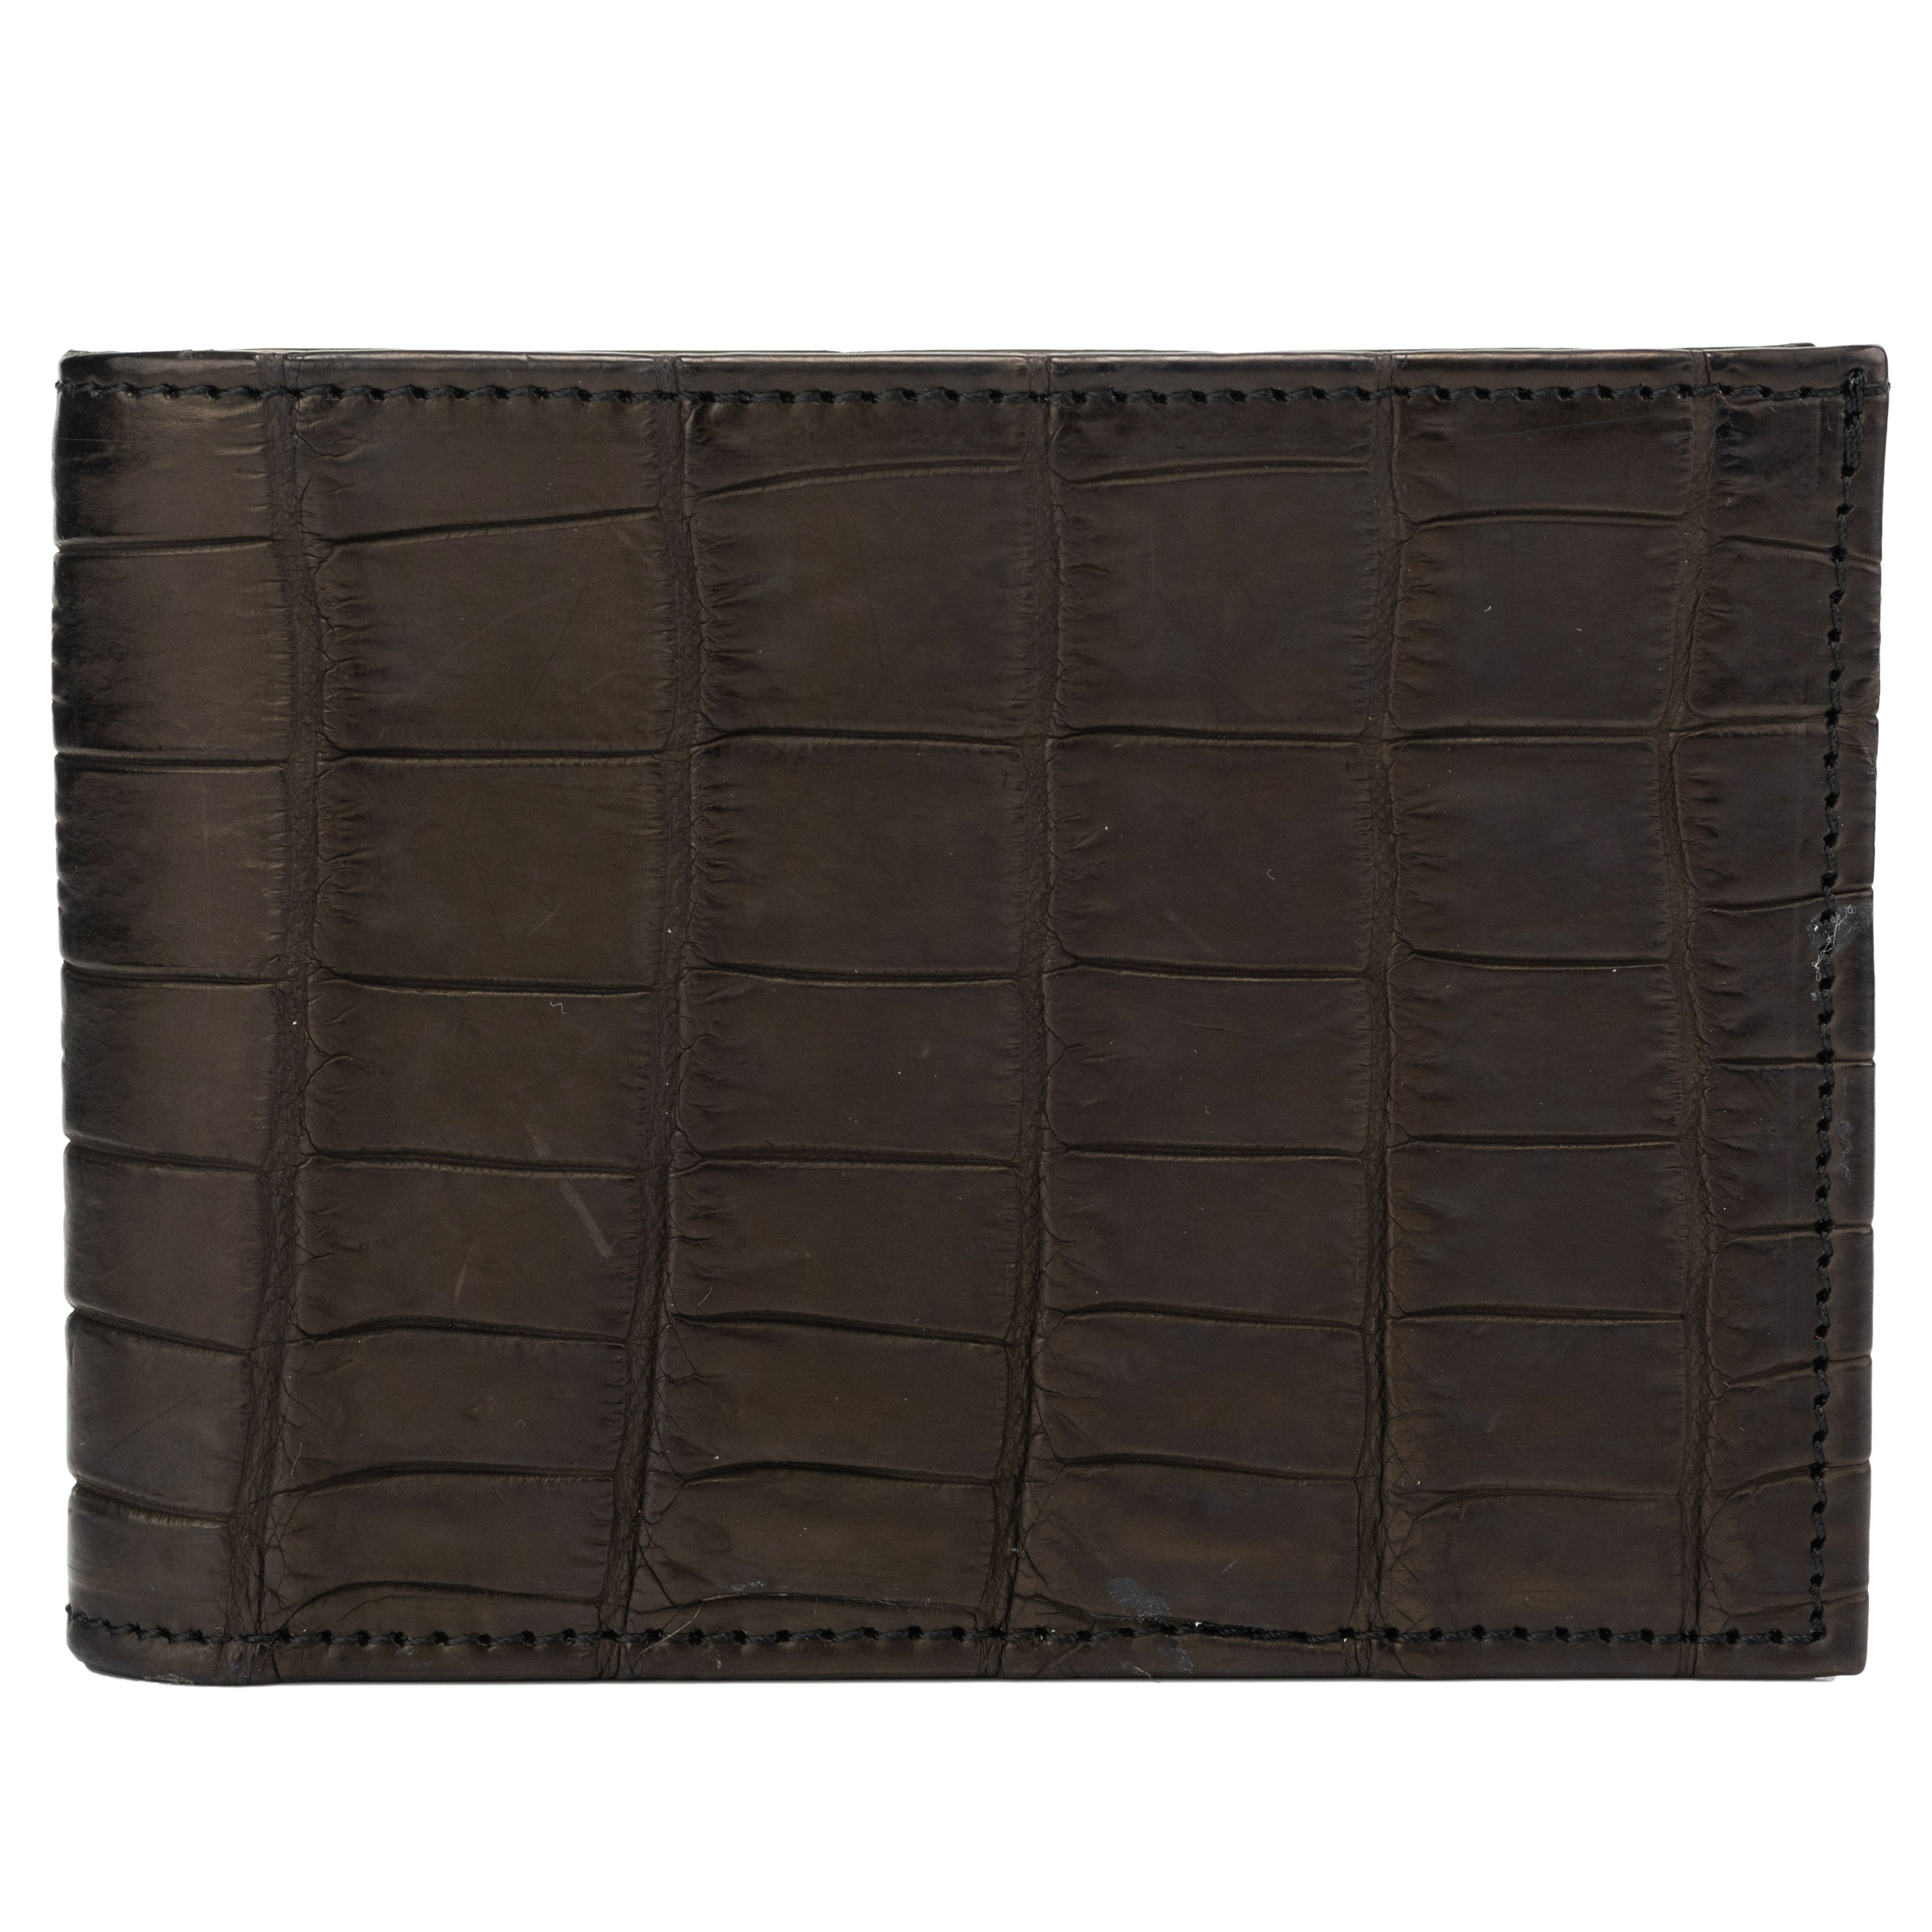 SUTOR MANTELLASSI Hand-Sewn Black-Brown Crocodile Leather Card Holder Wallet NEW SUTOR MANTELLASSI